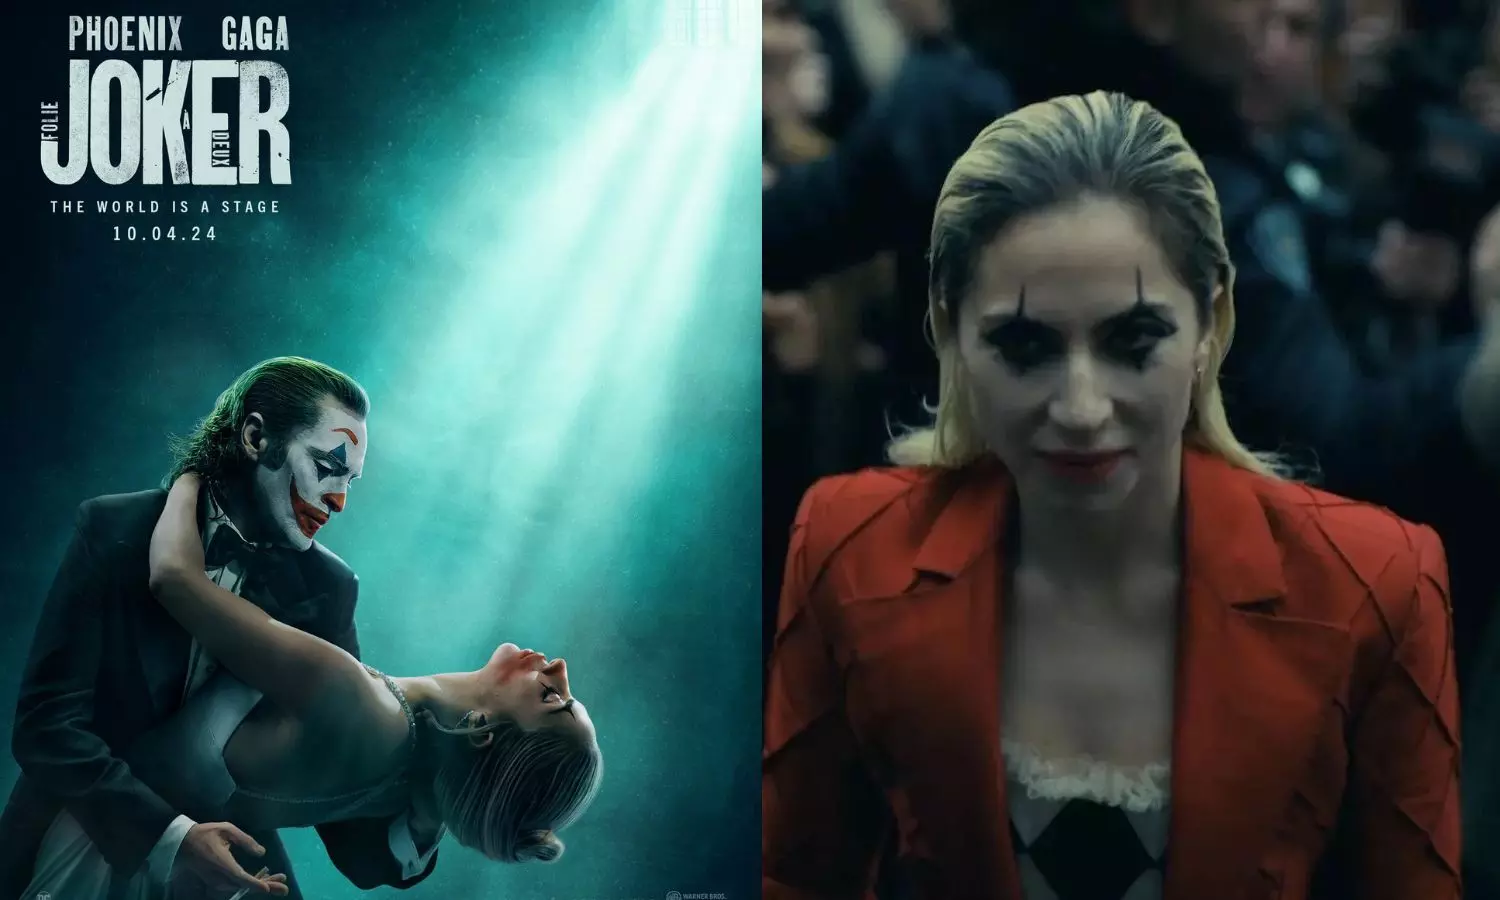 Joker Folie à Deux Trailer: Lady Gaga Joins Joaquin Phoenix in Highly Anticipated Sequel